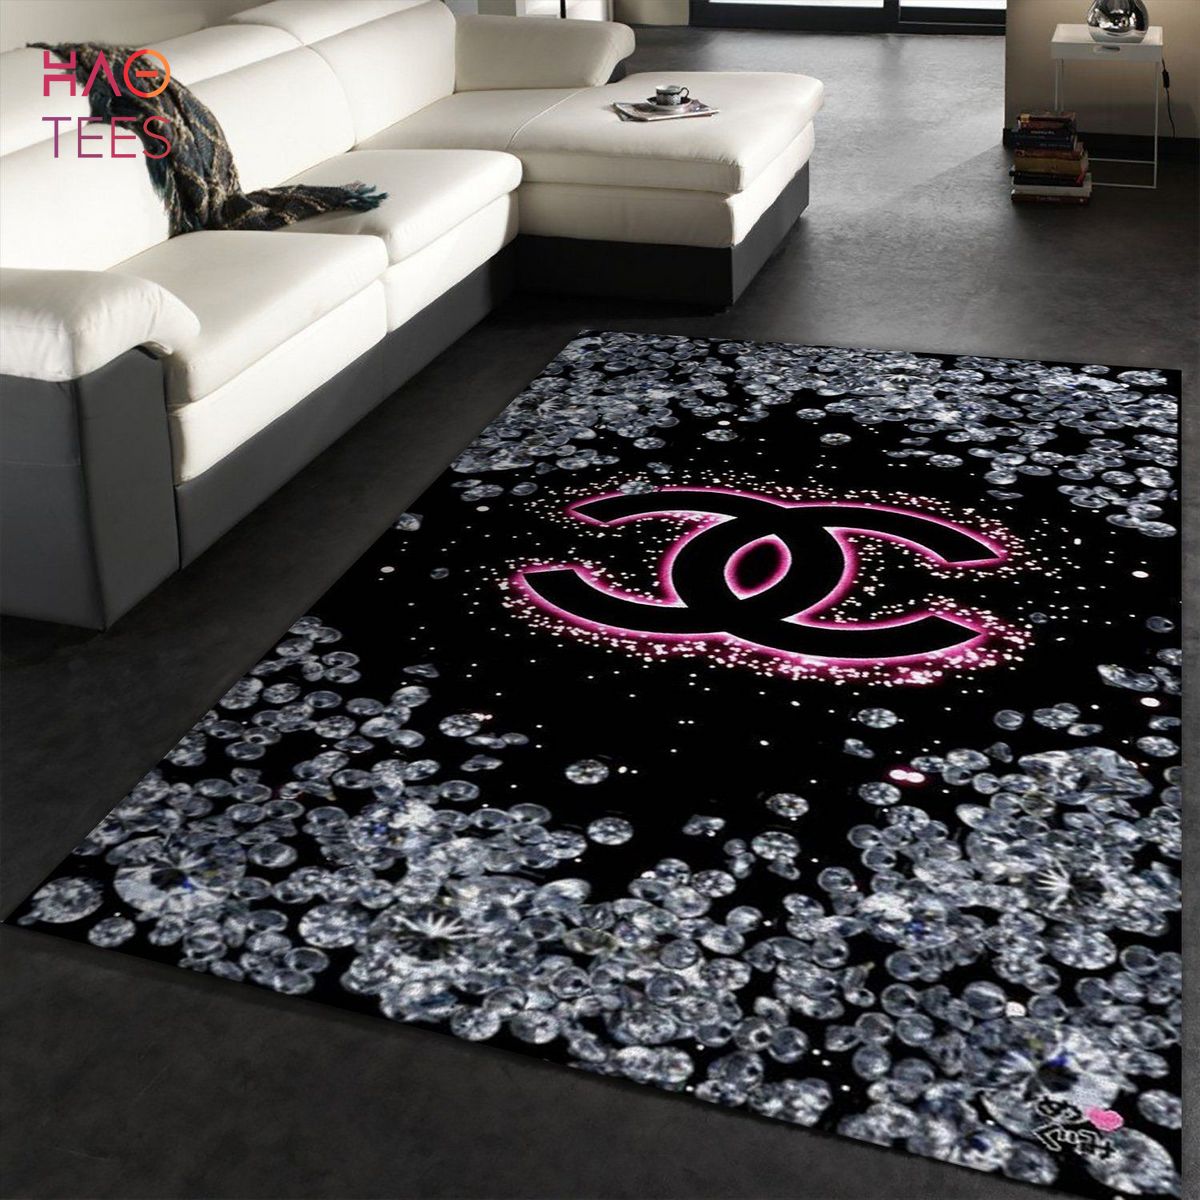 BEST Chanel Area Rugs Living Room Carpet Local Brands Floor Decor The US Decor